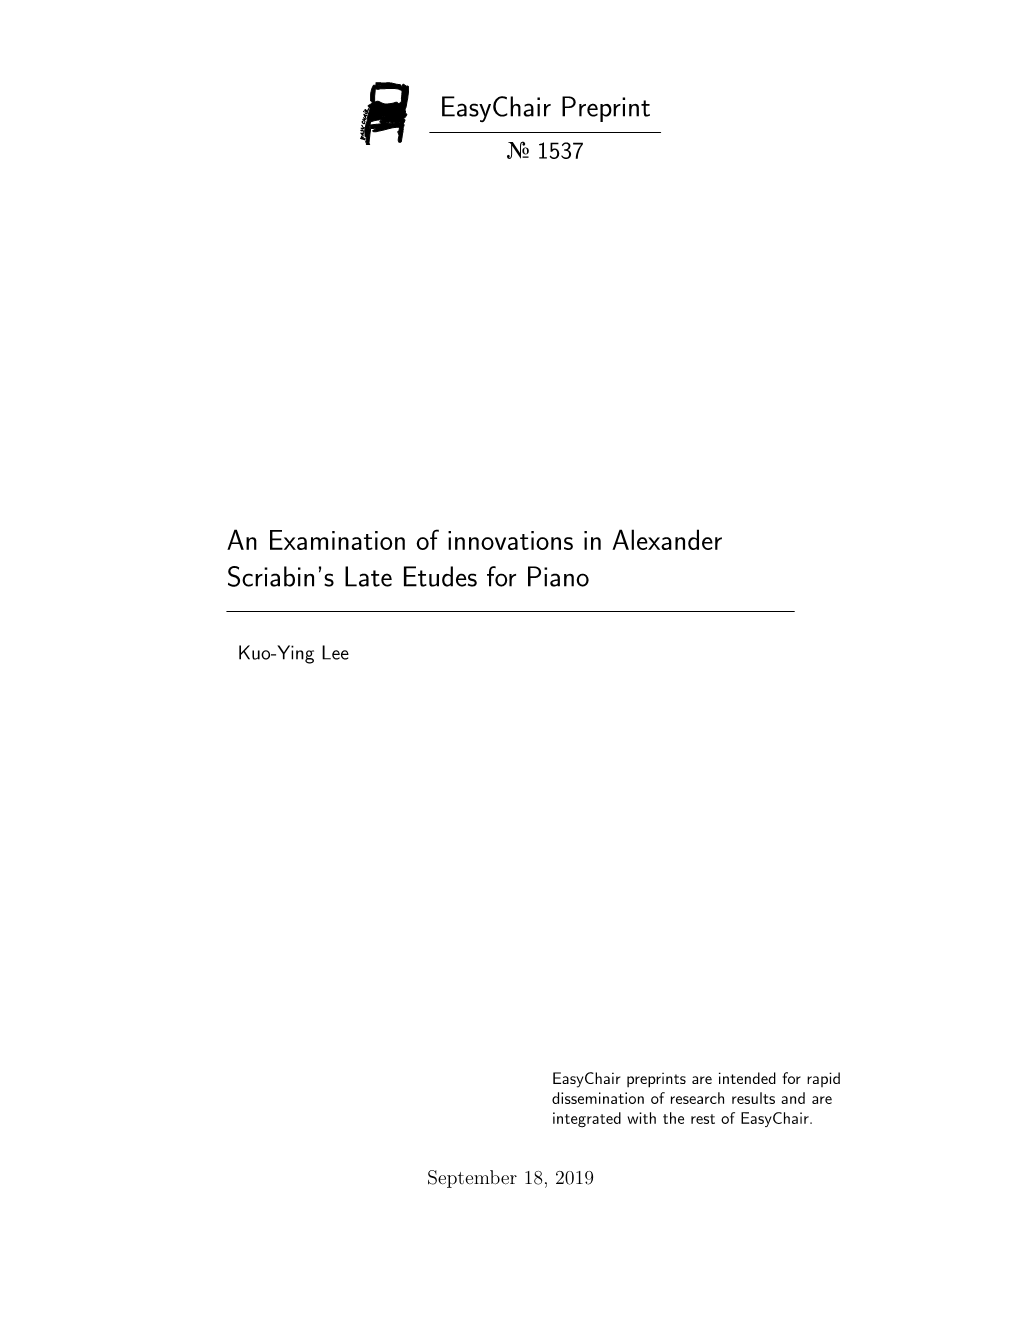 Easychair Preprint an Examination of Innovations in Alexander Scriabin's